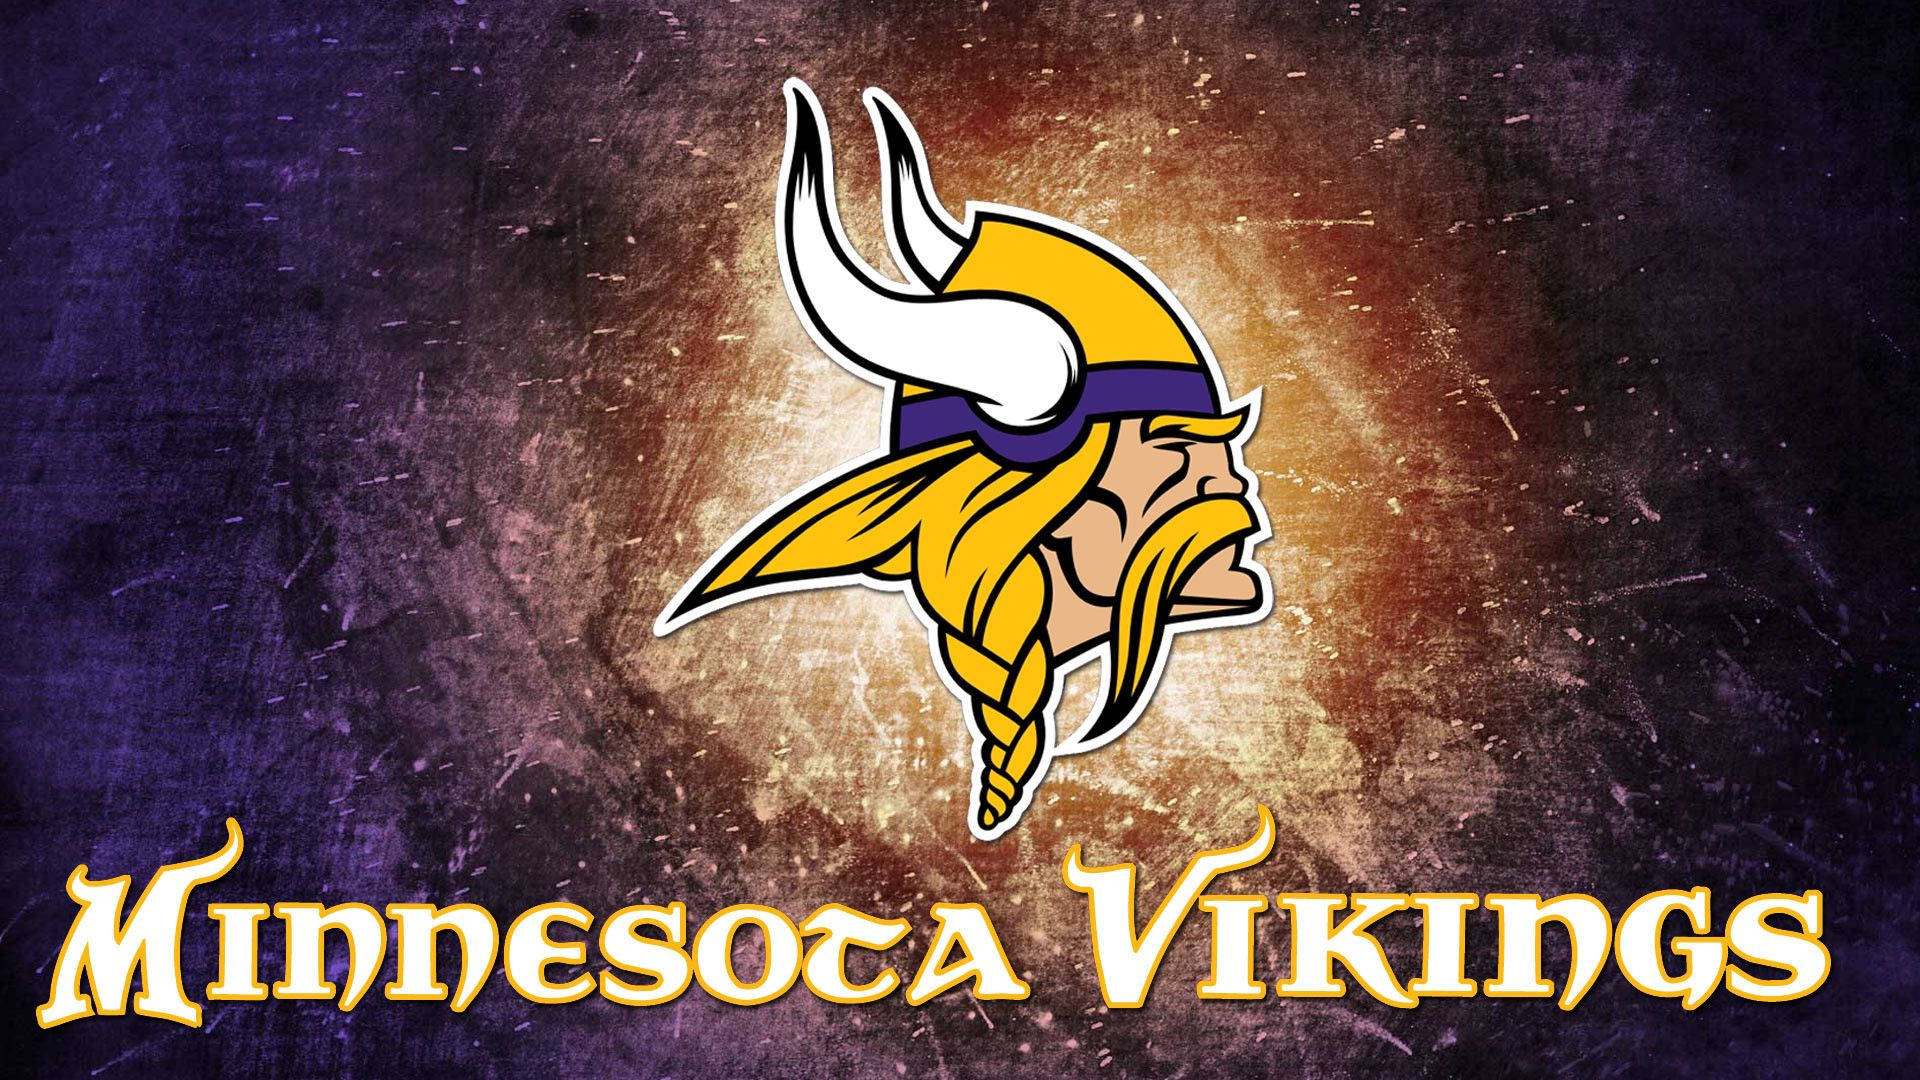 Download Minnesota Vikings NFL Team Logo Wallpaper